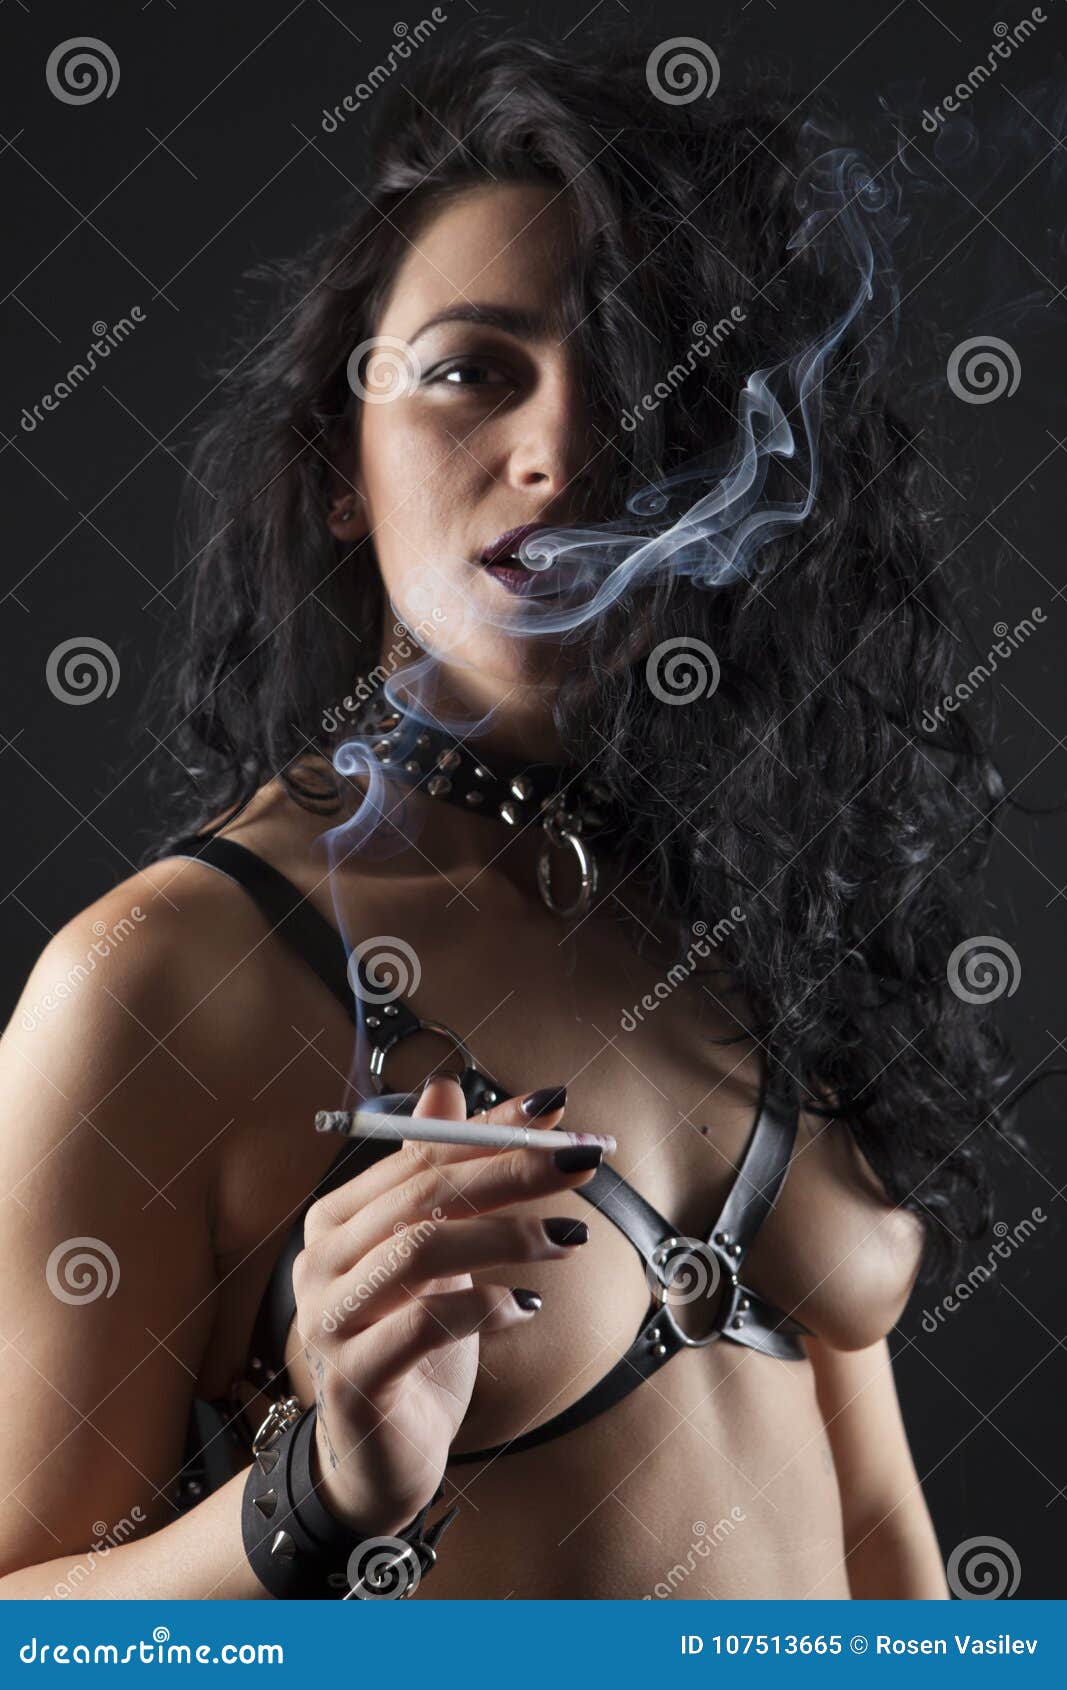 boryana todorova recommends naked women smoking cigars pic